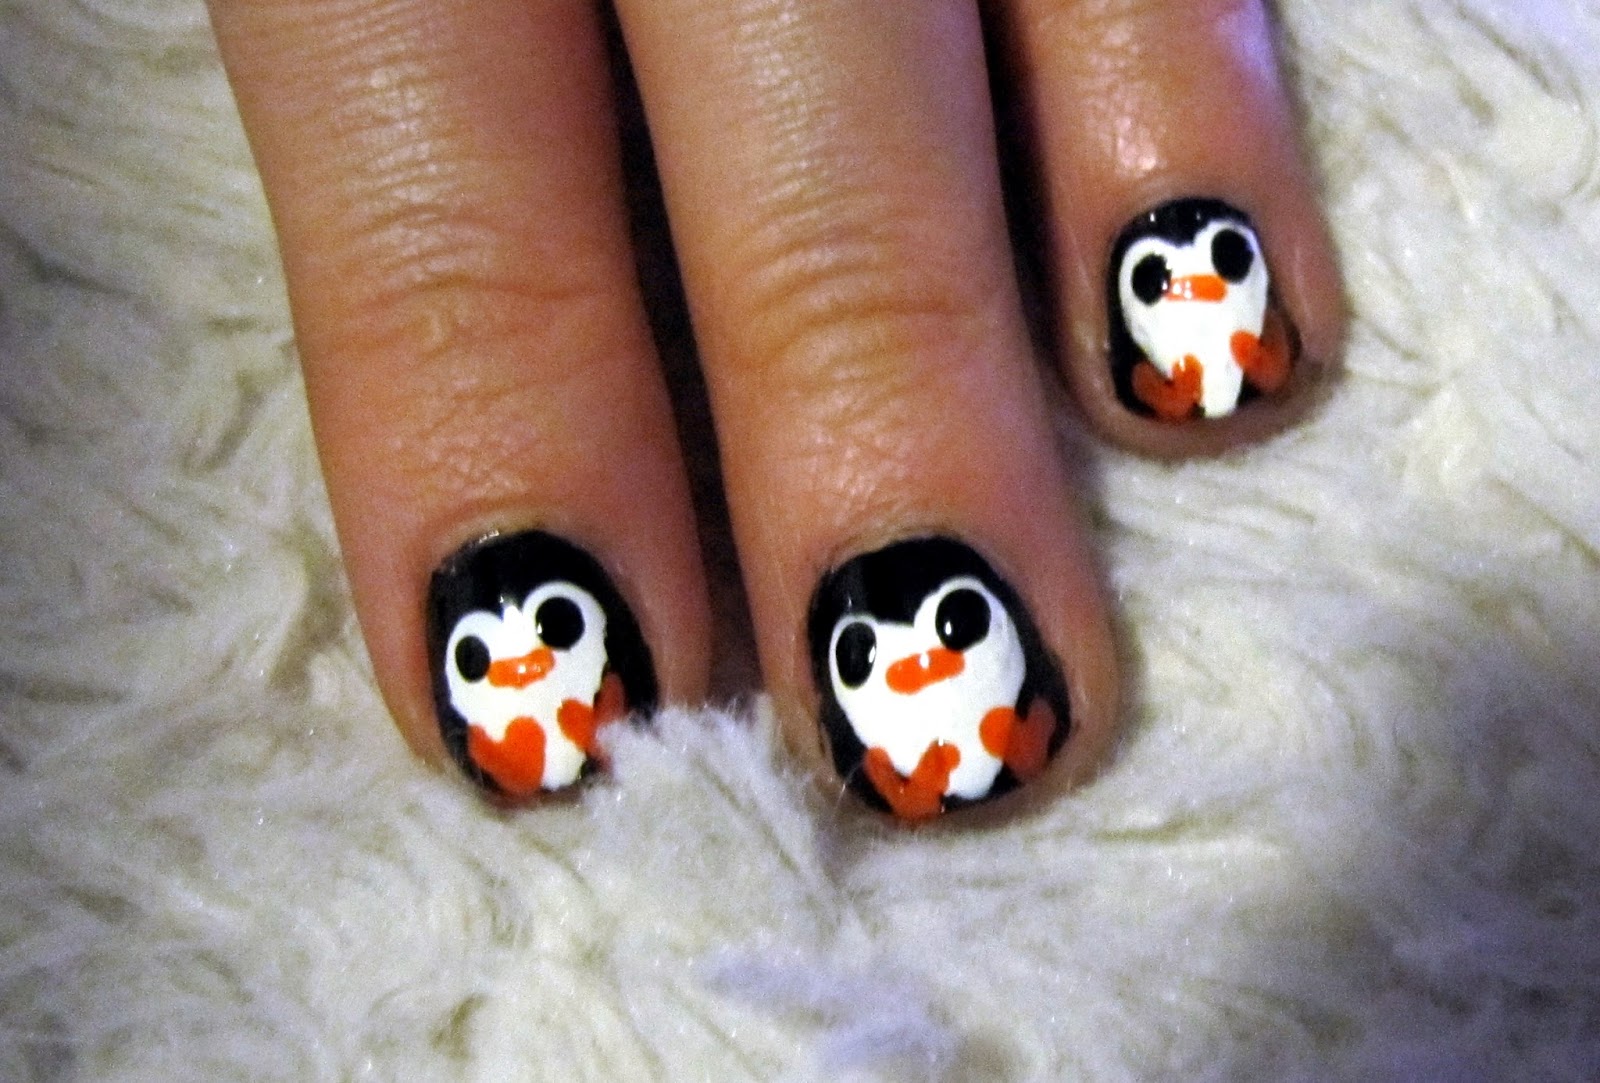 Amazing penguin nail art!